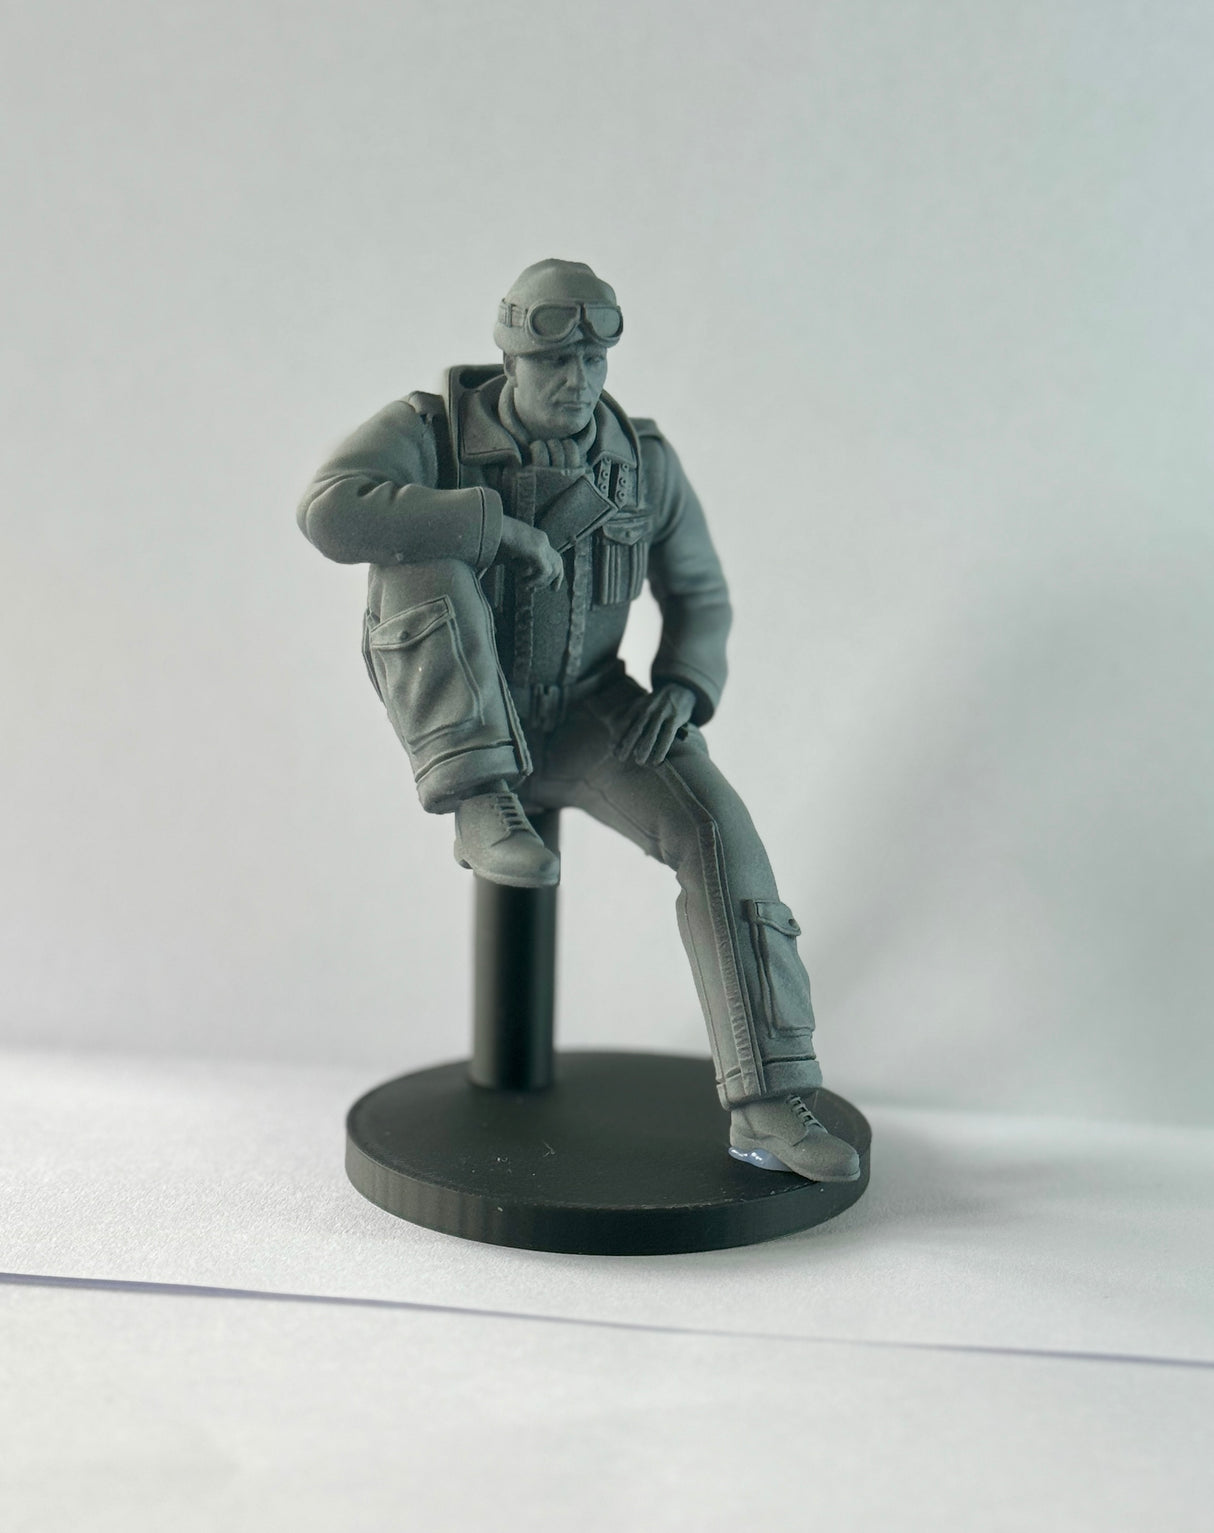 1/16 3D Printed Figures